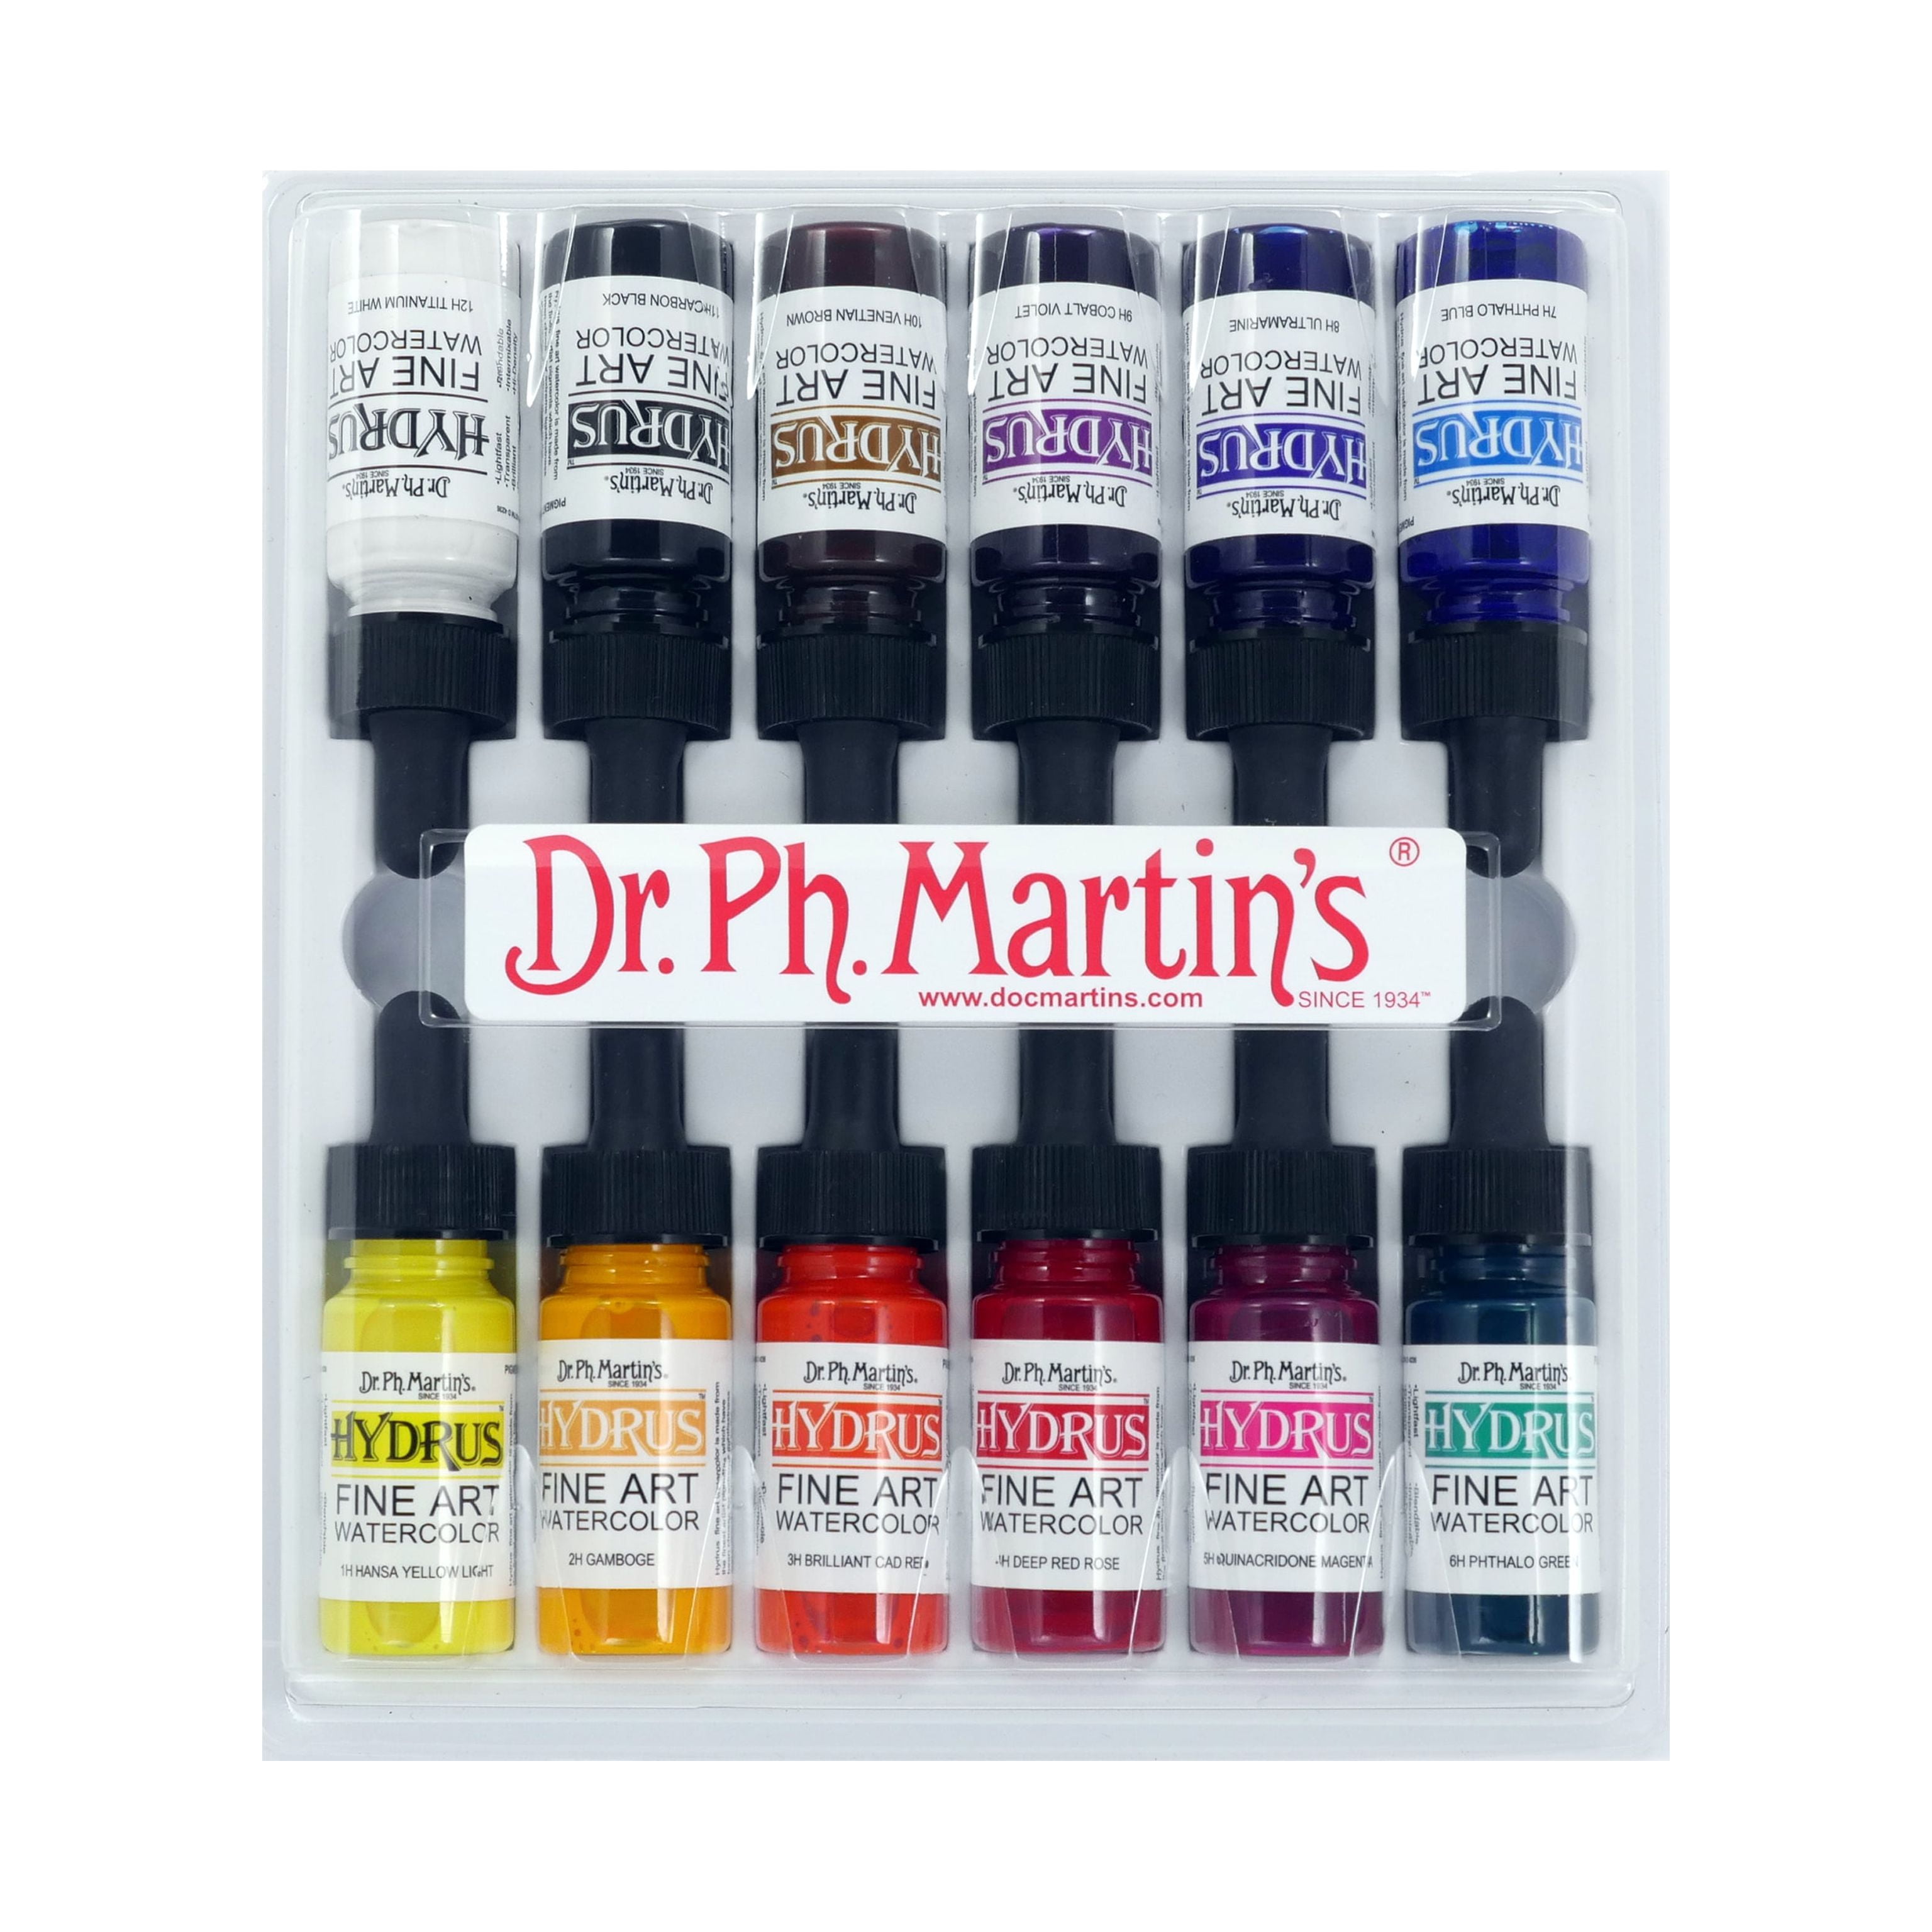 Dr. Ph. Martin's Hydrus Fine Art Watercolor, 0.5 oz, Set of 12 (Set 1)